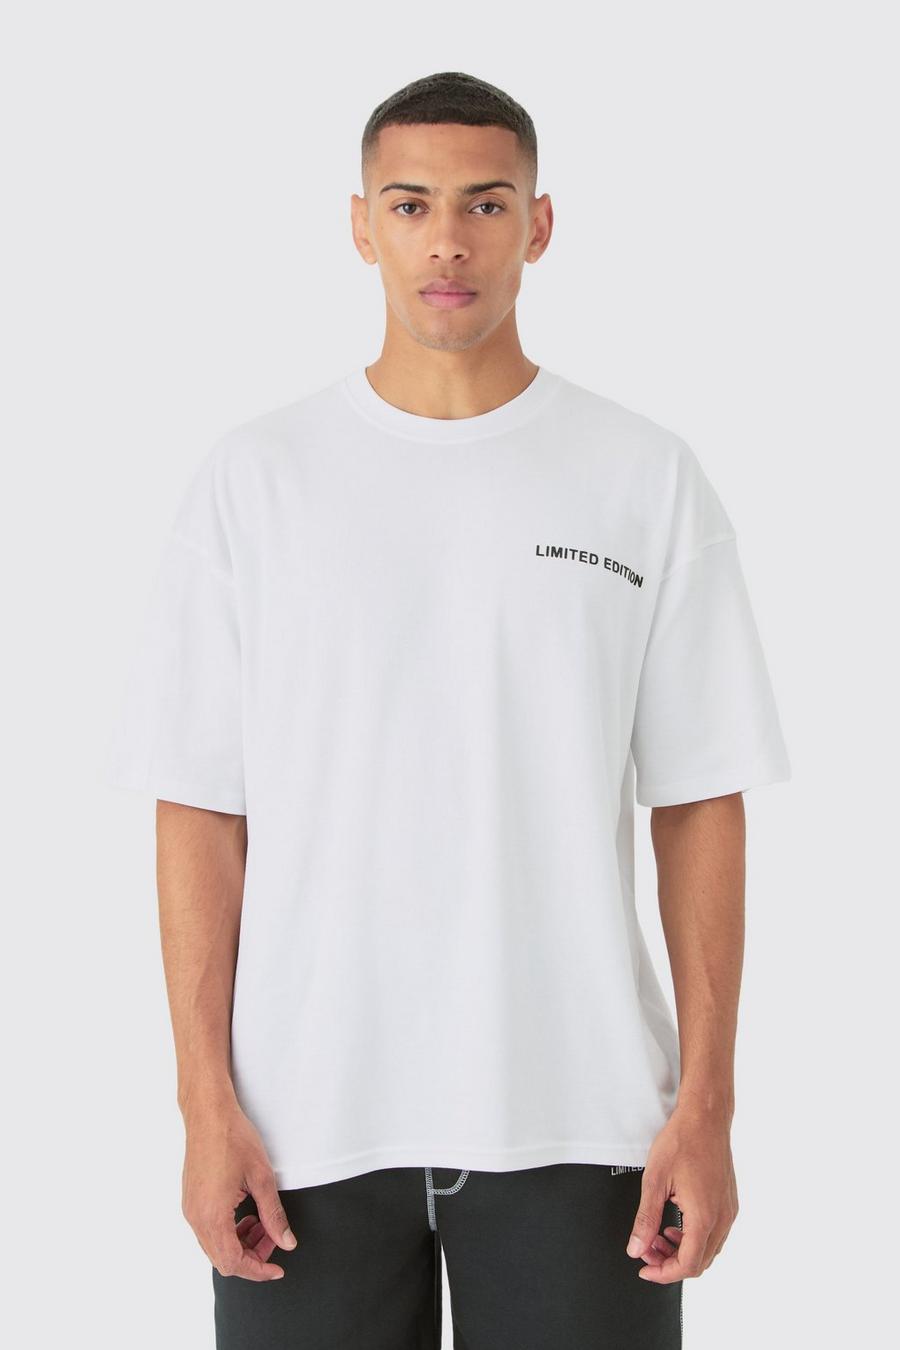 White Oversized Super Clean Limited Interlock T-Shirt